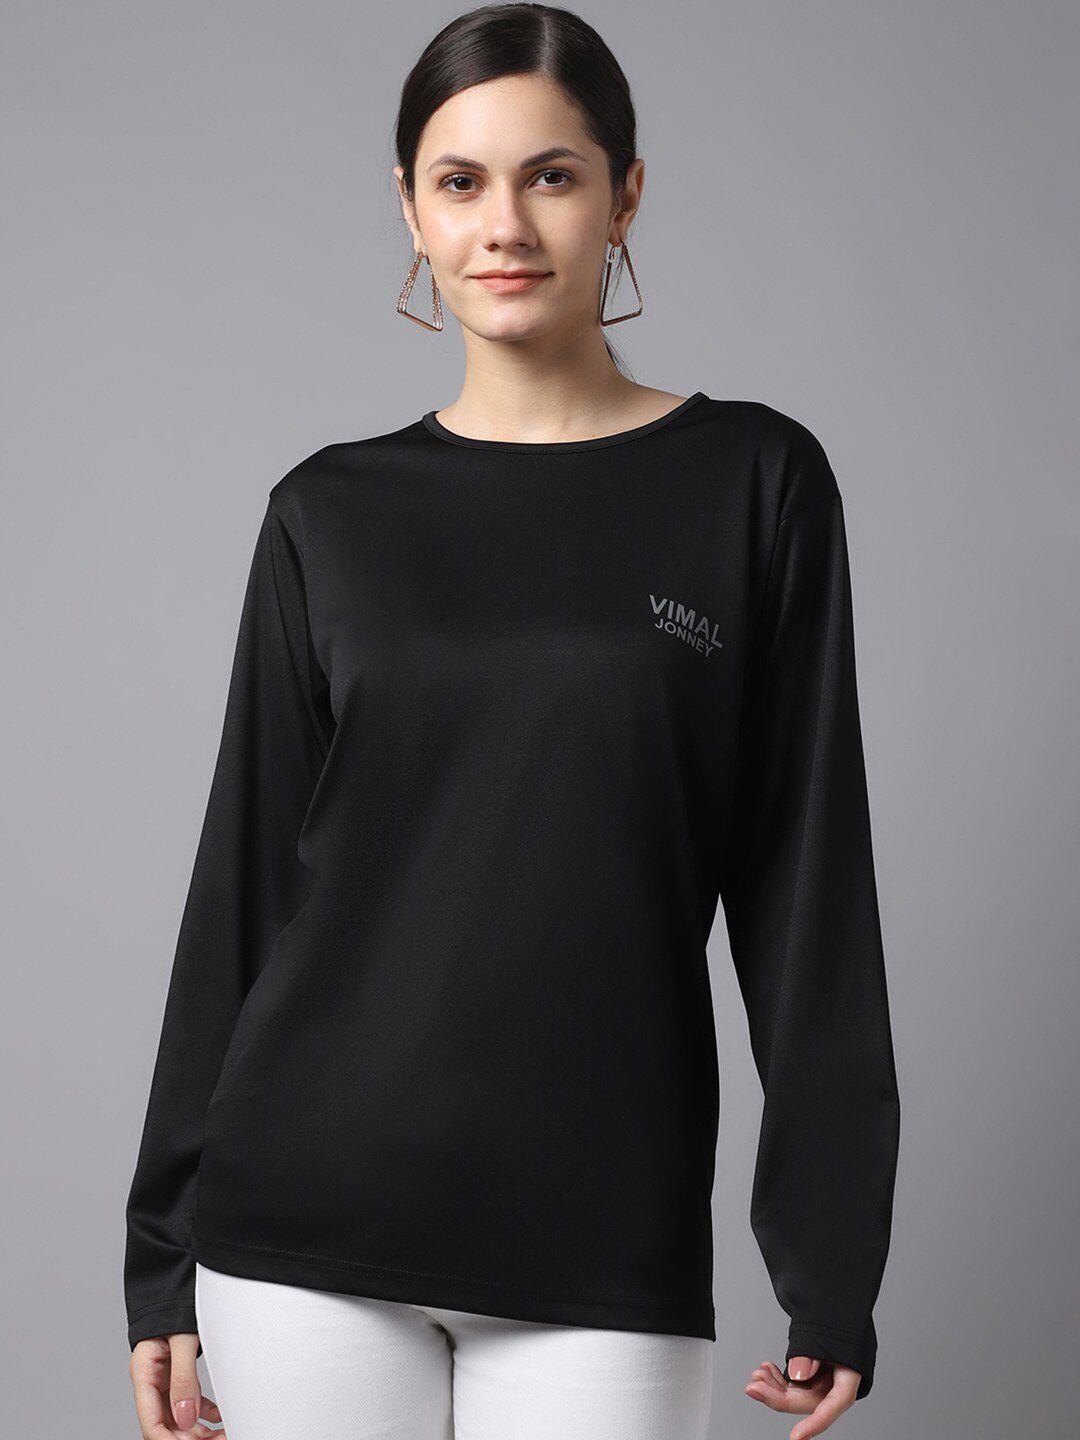 vimal-jonney-women-black-t-shirt